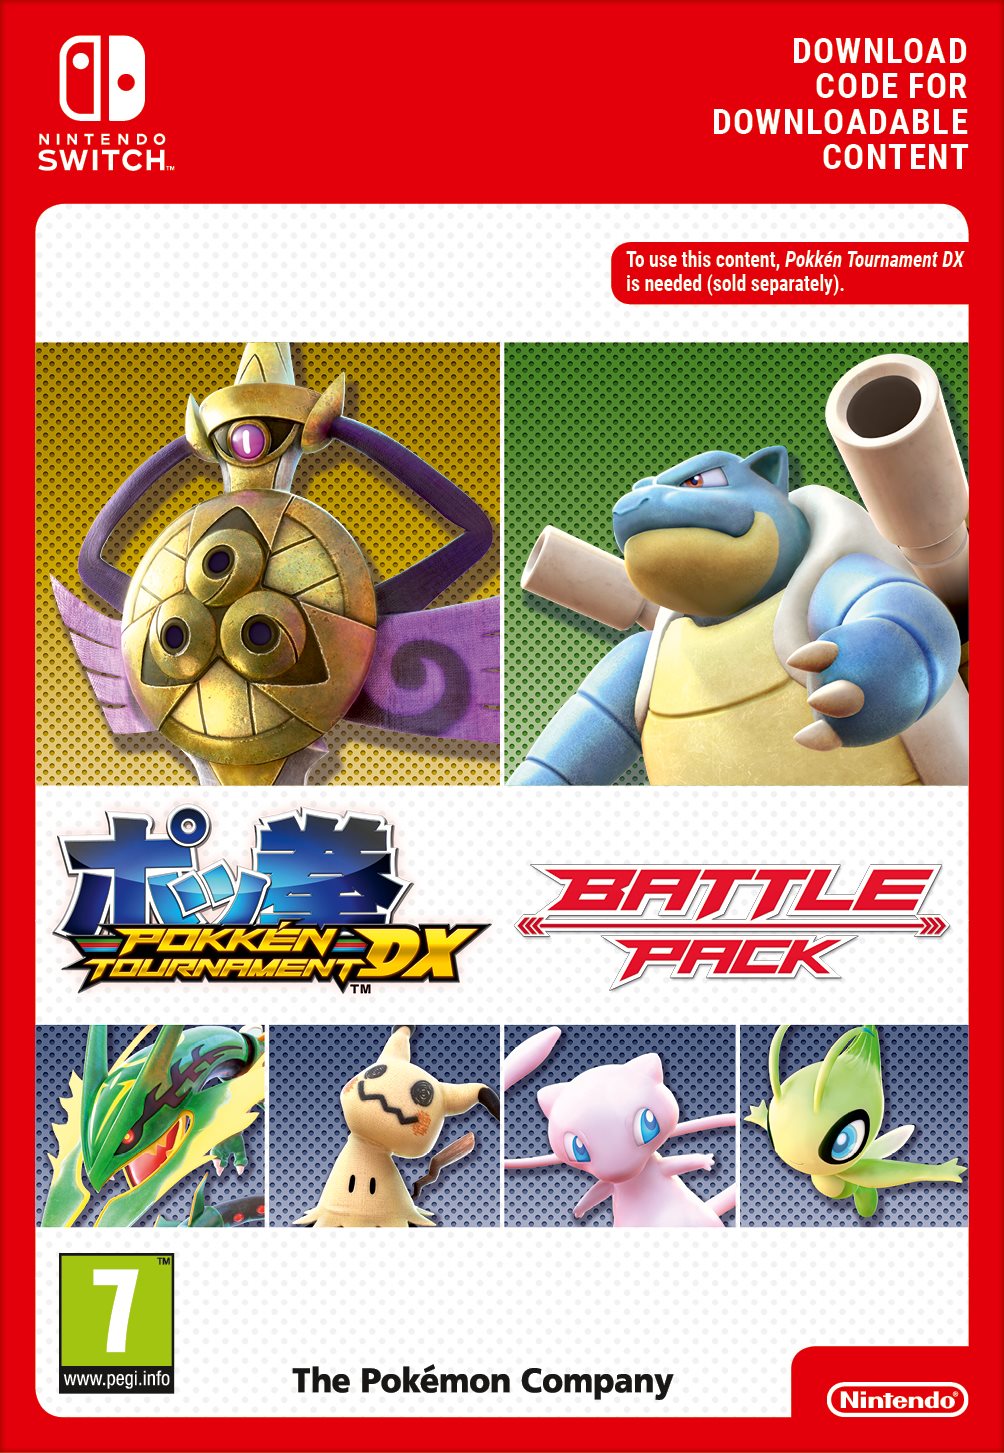 Pokken Tournament DX Battle Pack - Nintendo Switch Digital